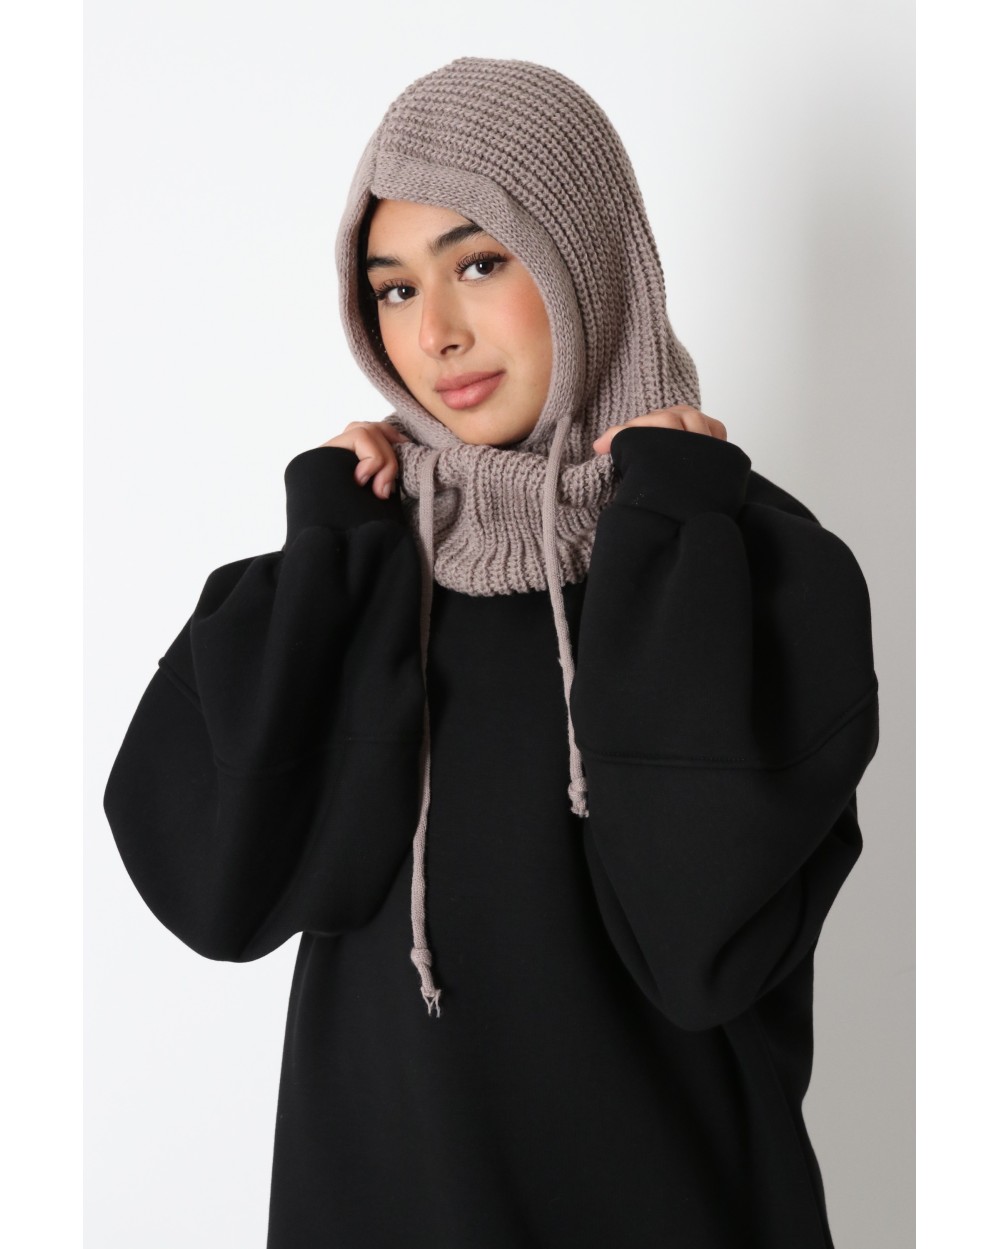 Hijab mesh balaclava